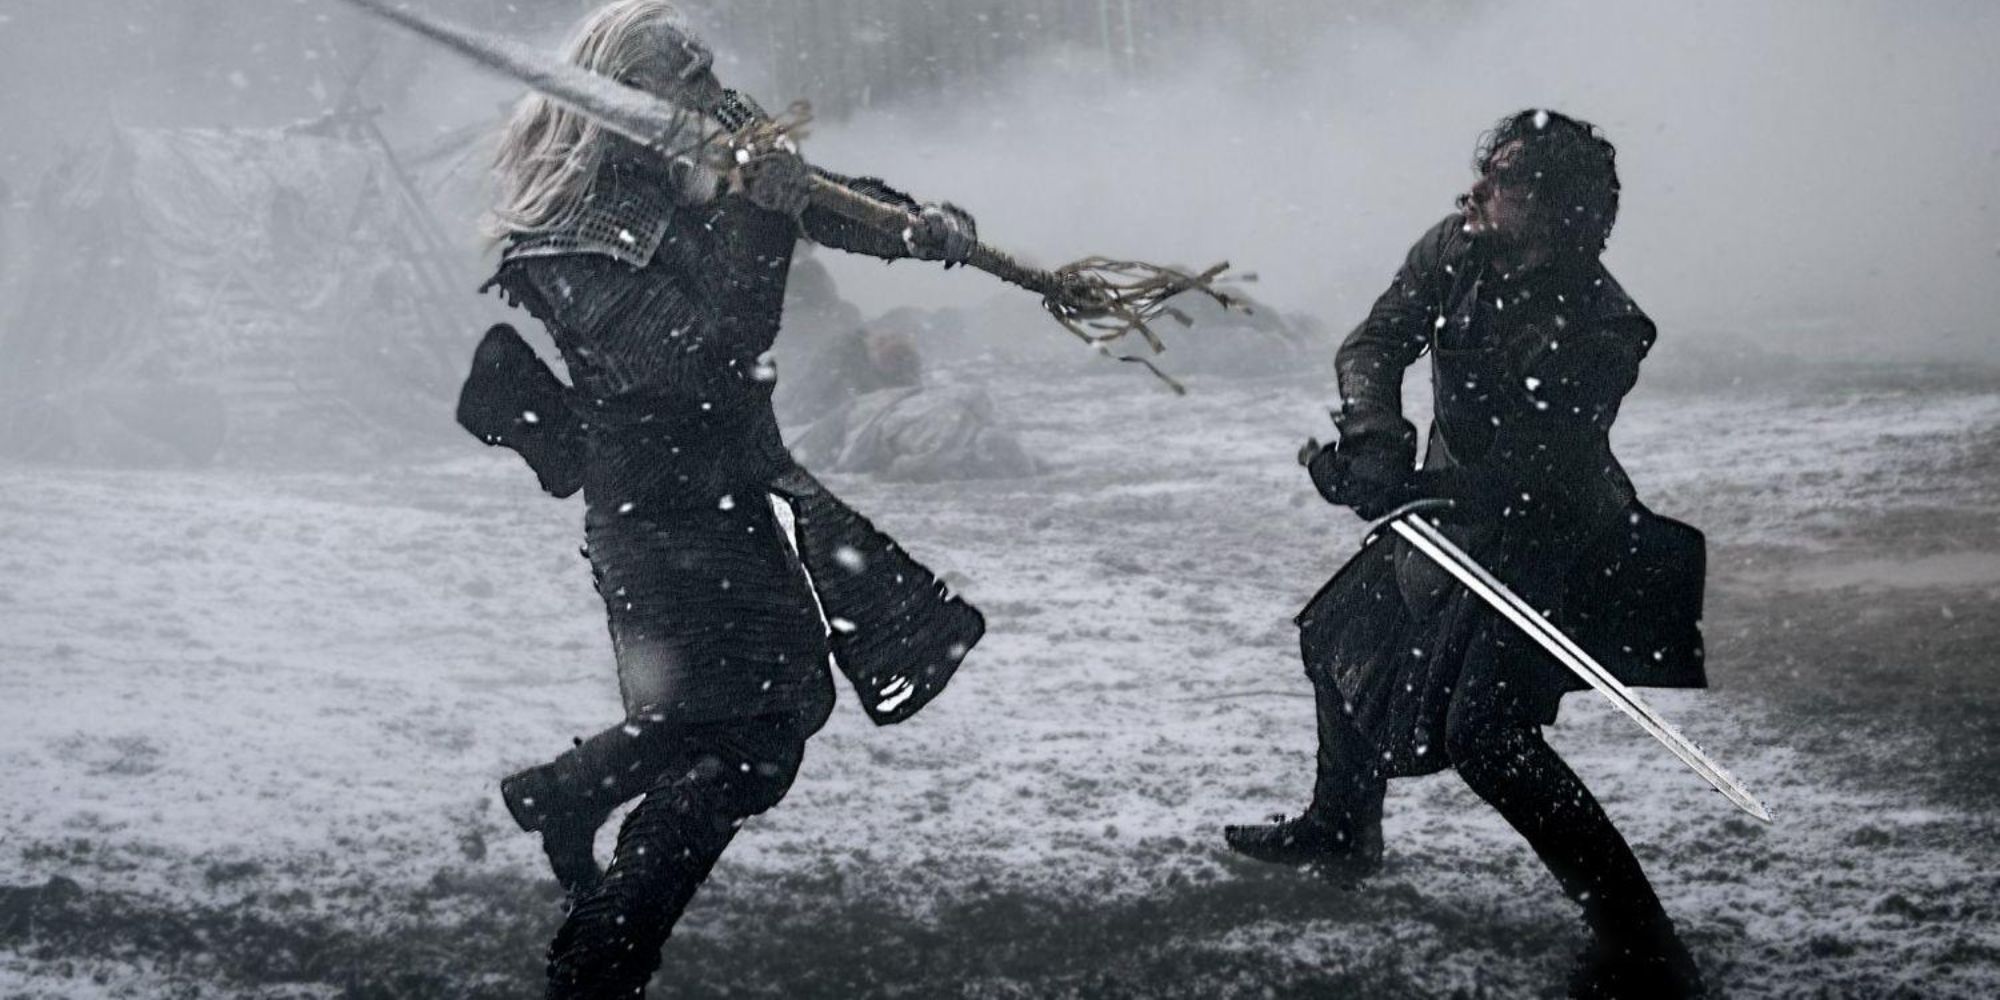 Kit Harington as Jon Snow fighting a White Walker in Game of Thrones.